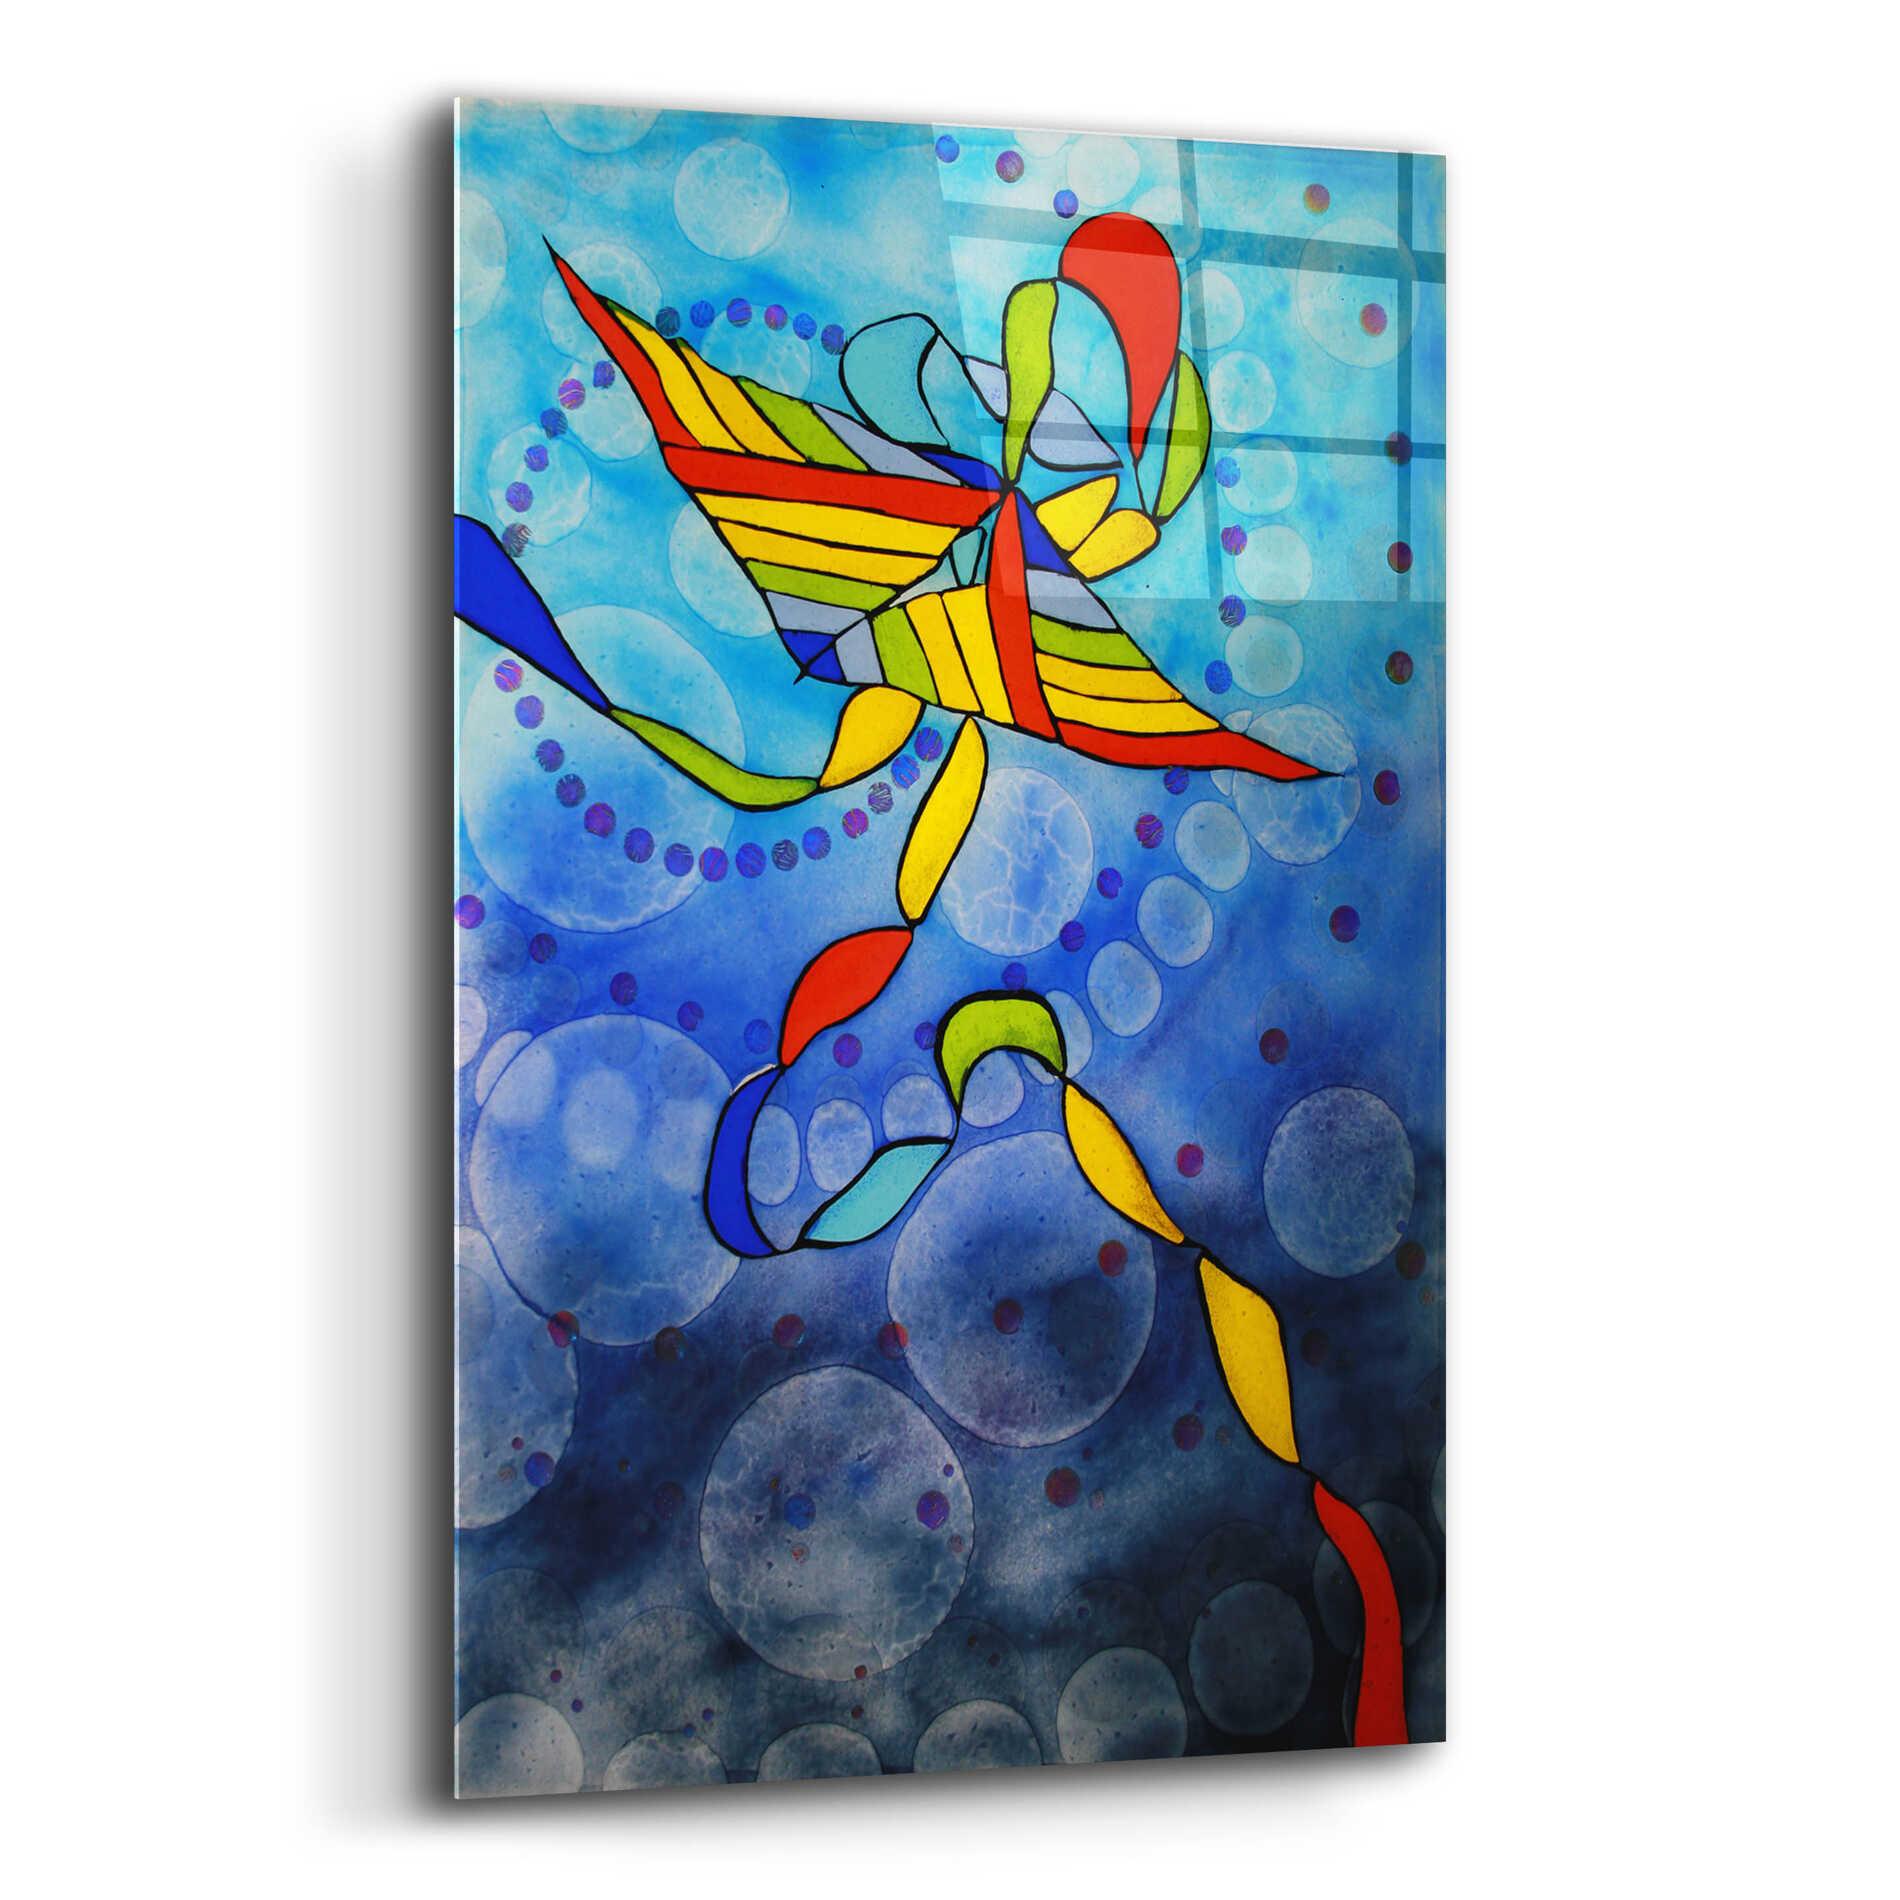 Epic Art 'Kite Transmitted' by Rita Shimelfarb, Acrylic Glass Wall Art,16x24